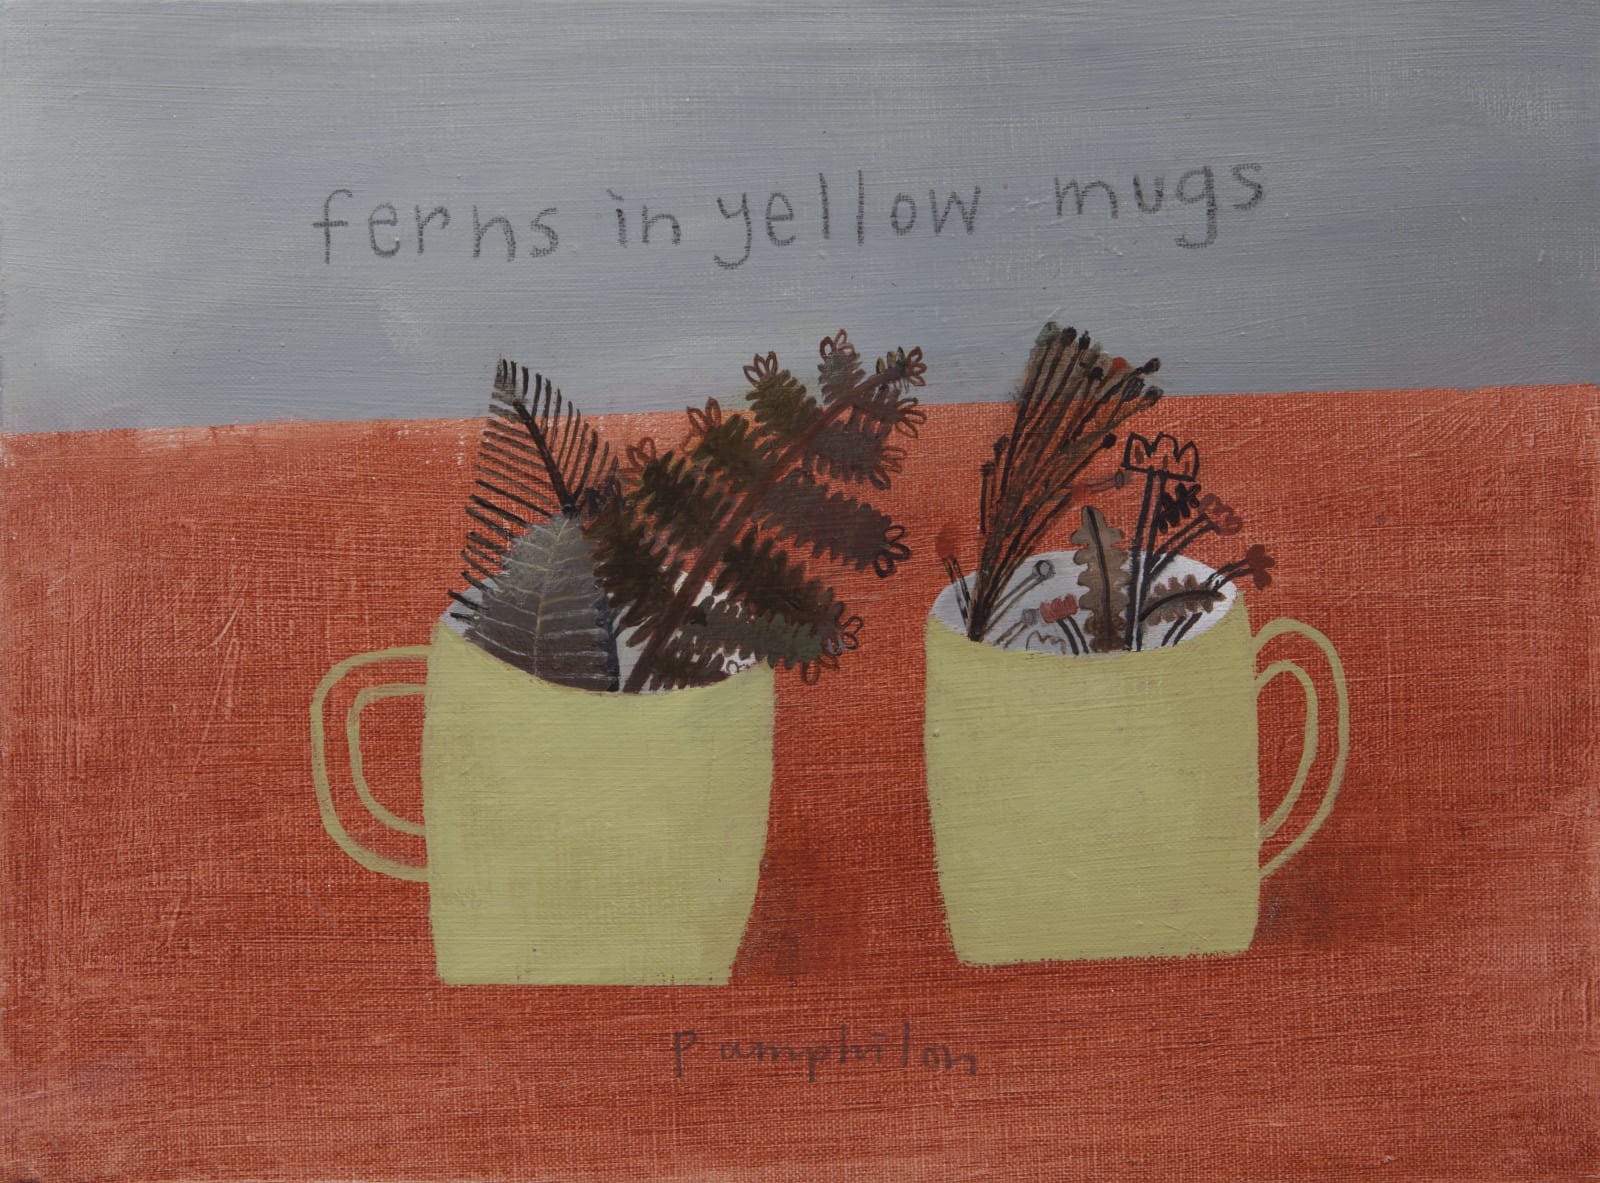 Elaine Pamphilon, Ferns in Yellow Mugs